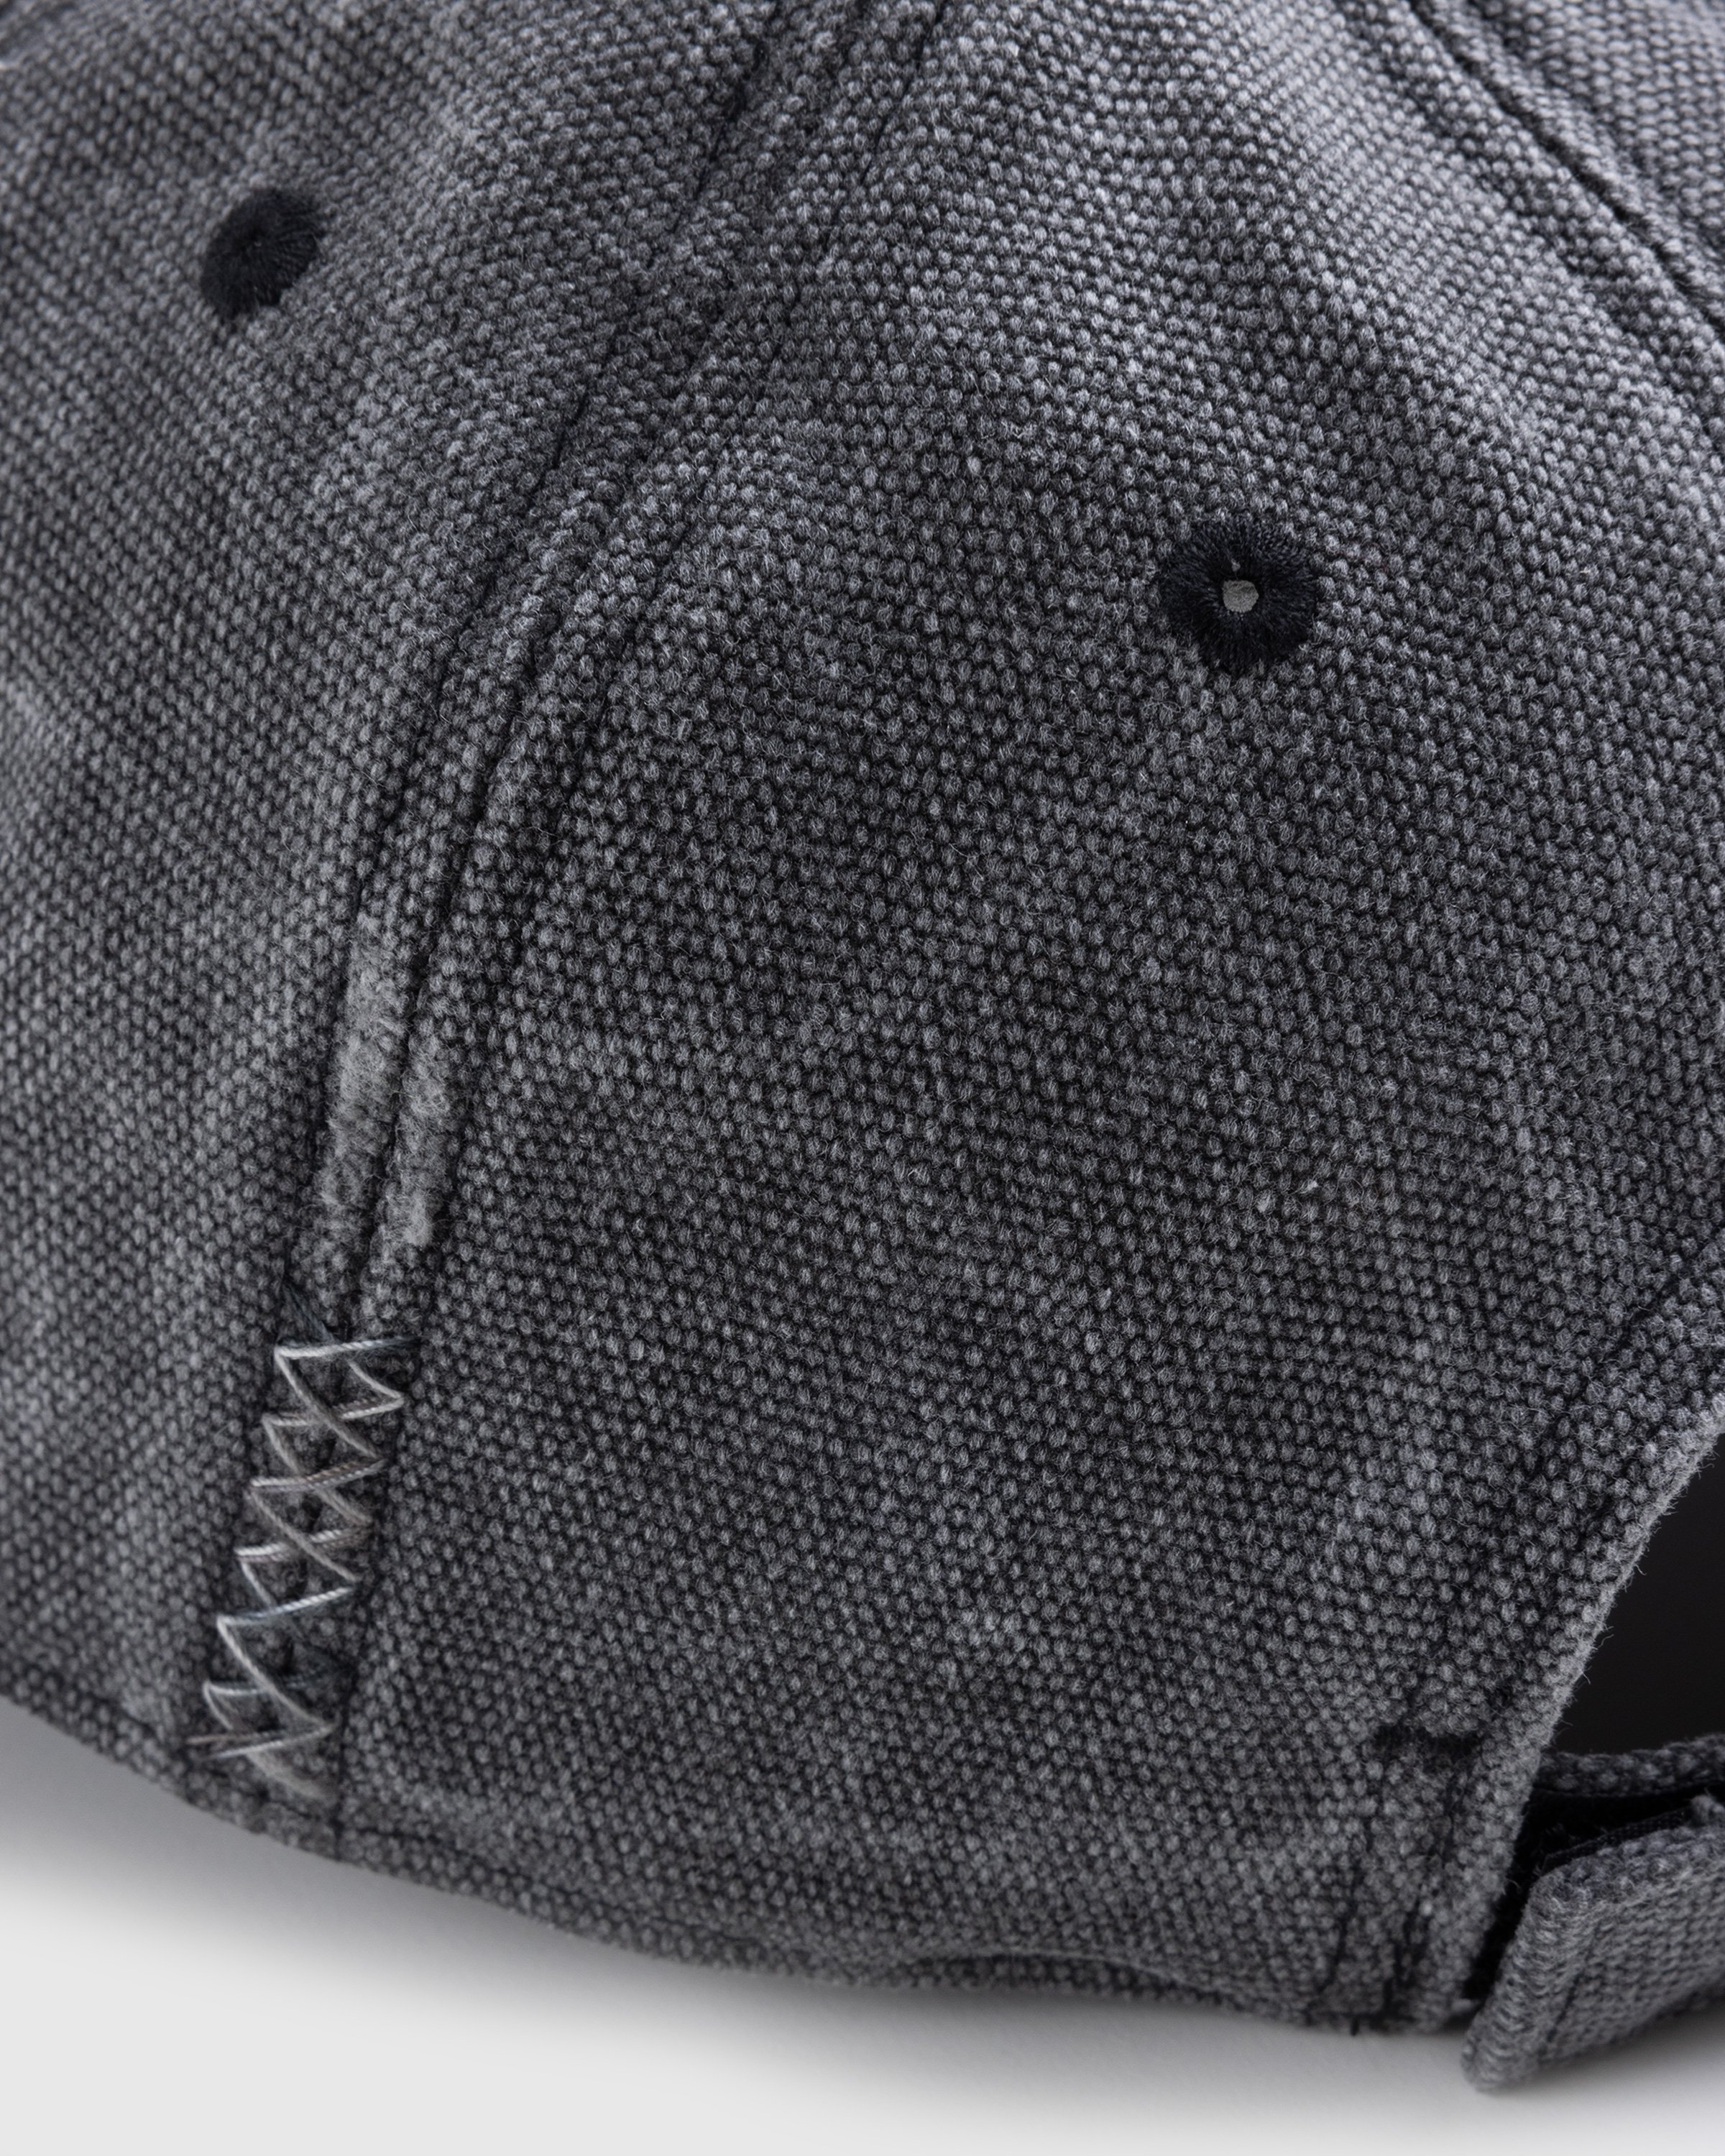 Acne Studios - Leather Face Patch Cap Carbon Grey - Accessories - Grey - Image 5